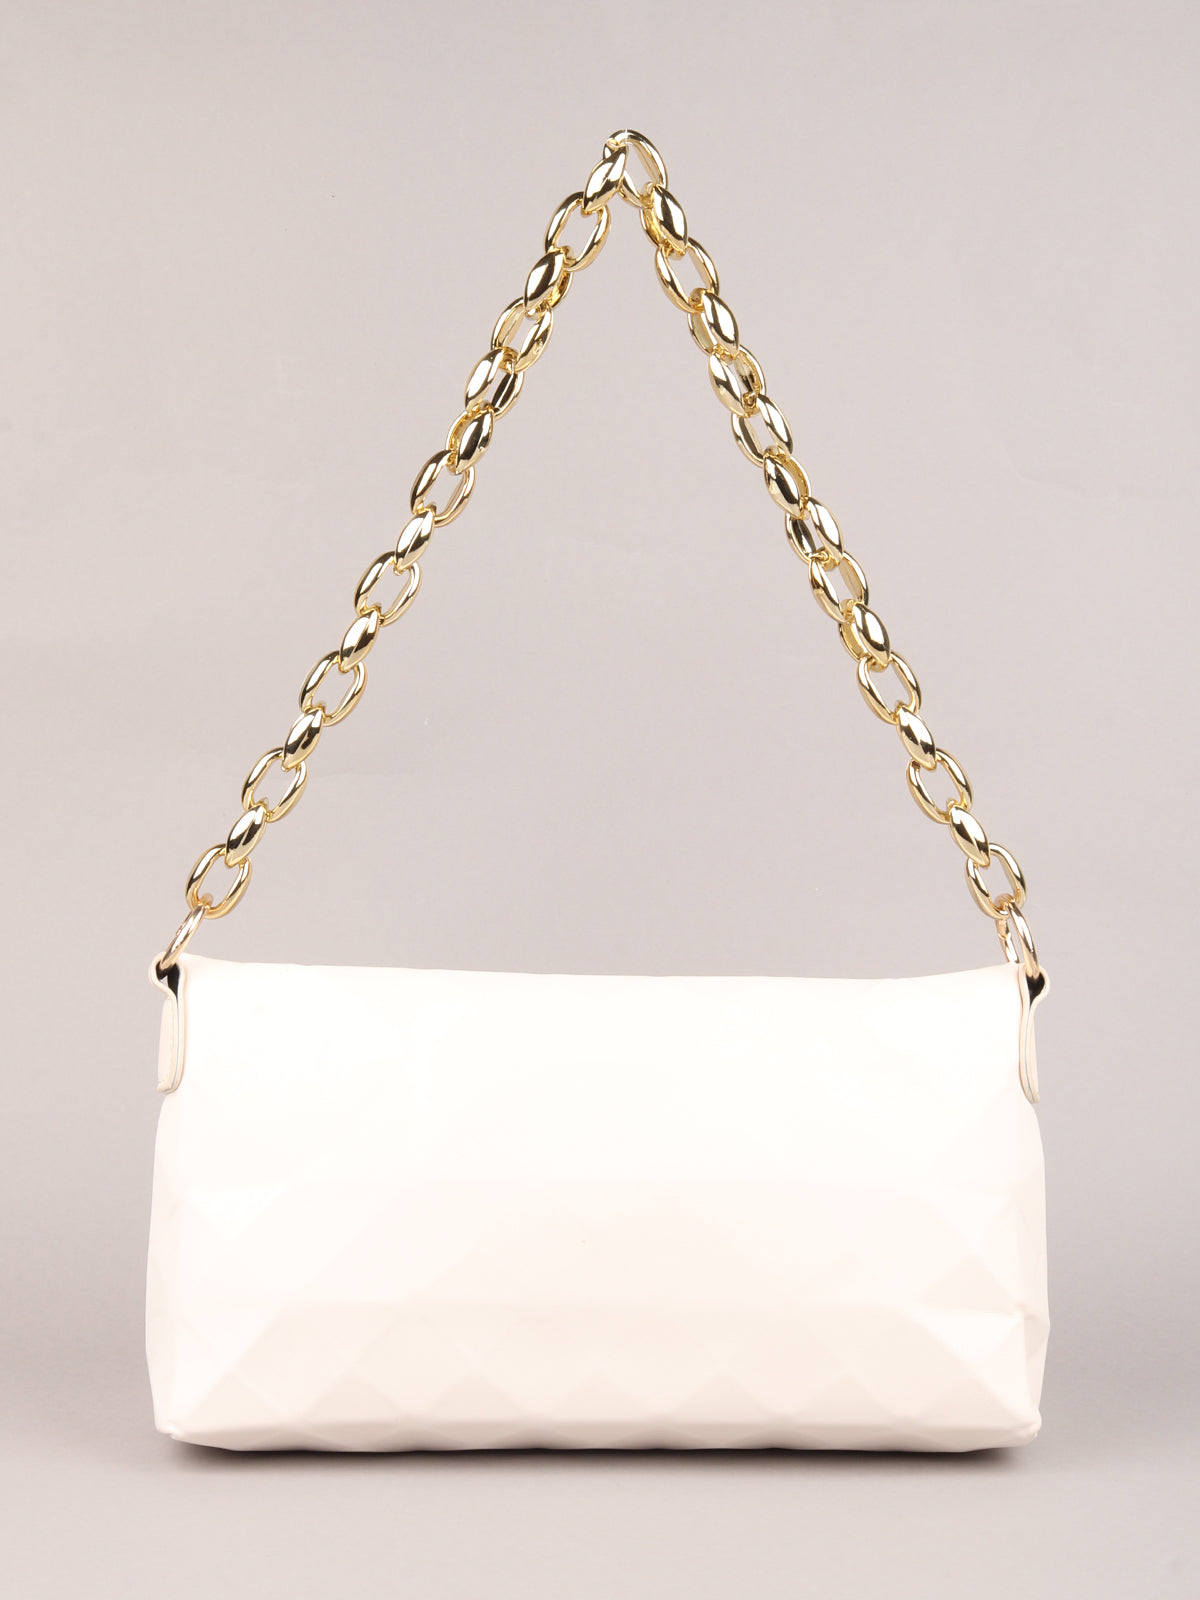 Odette White Patterned Clutch Bag For Women